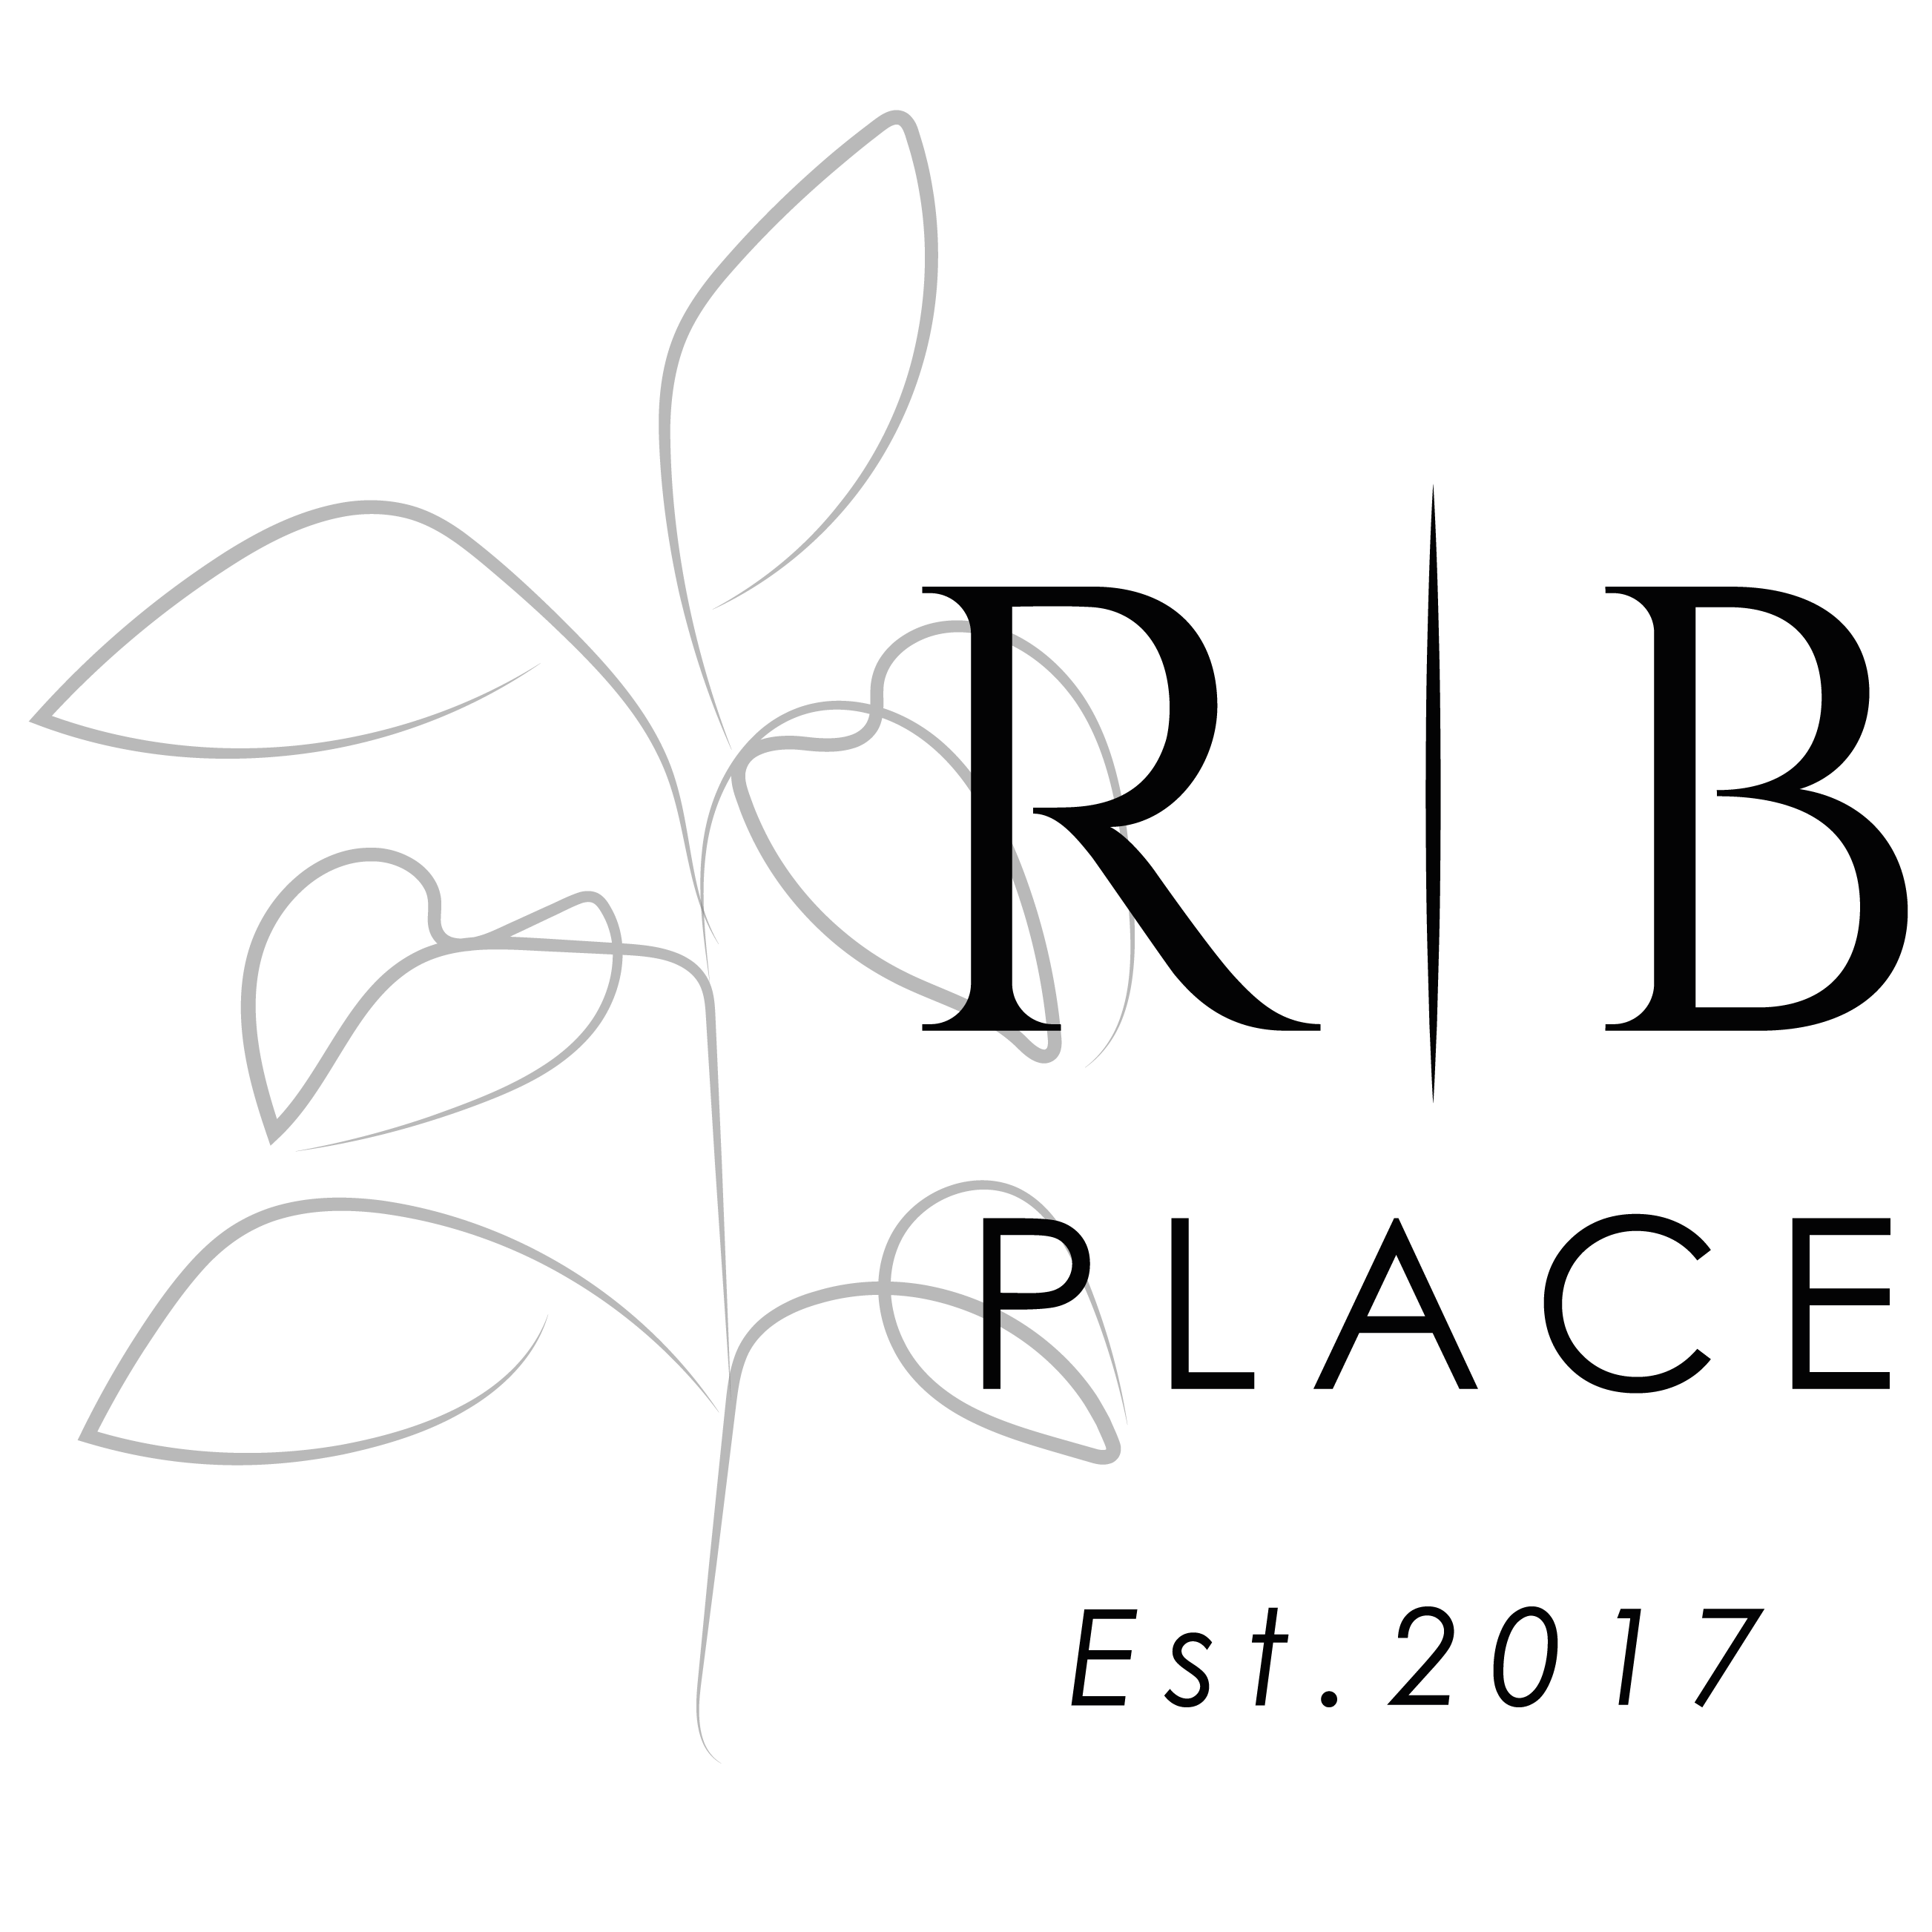 RBplace, Immobilier Espagne Logo